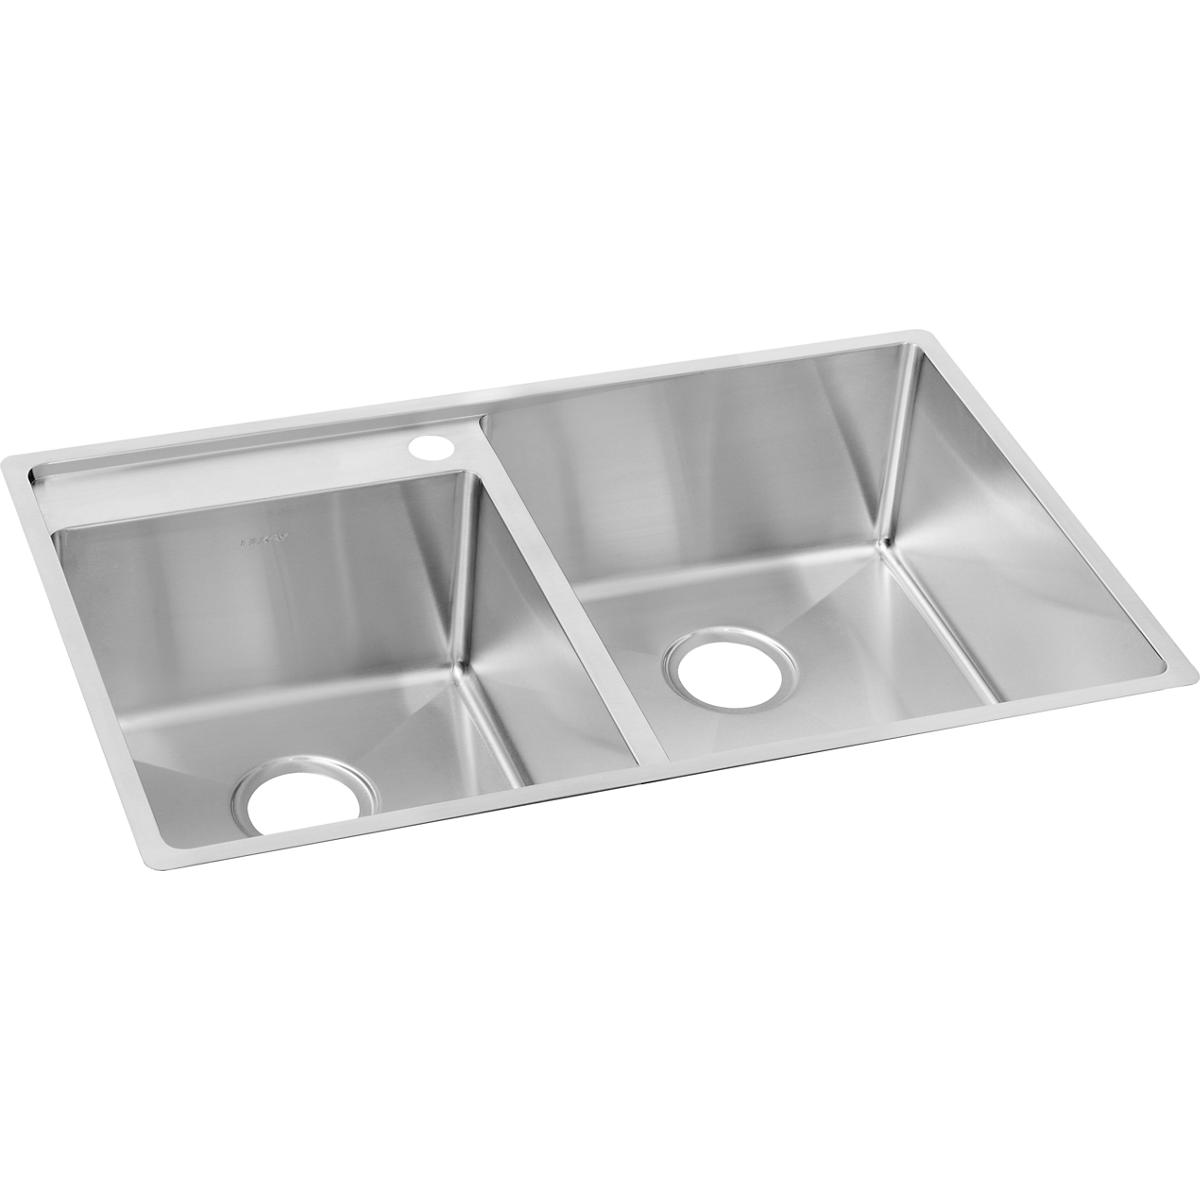 Rene 31 Stainless Steel Kitchen Sink, 55/45 Double Bowl, 18 Gauge